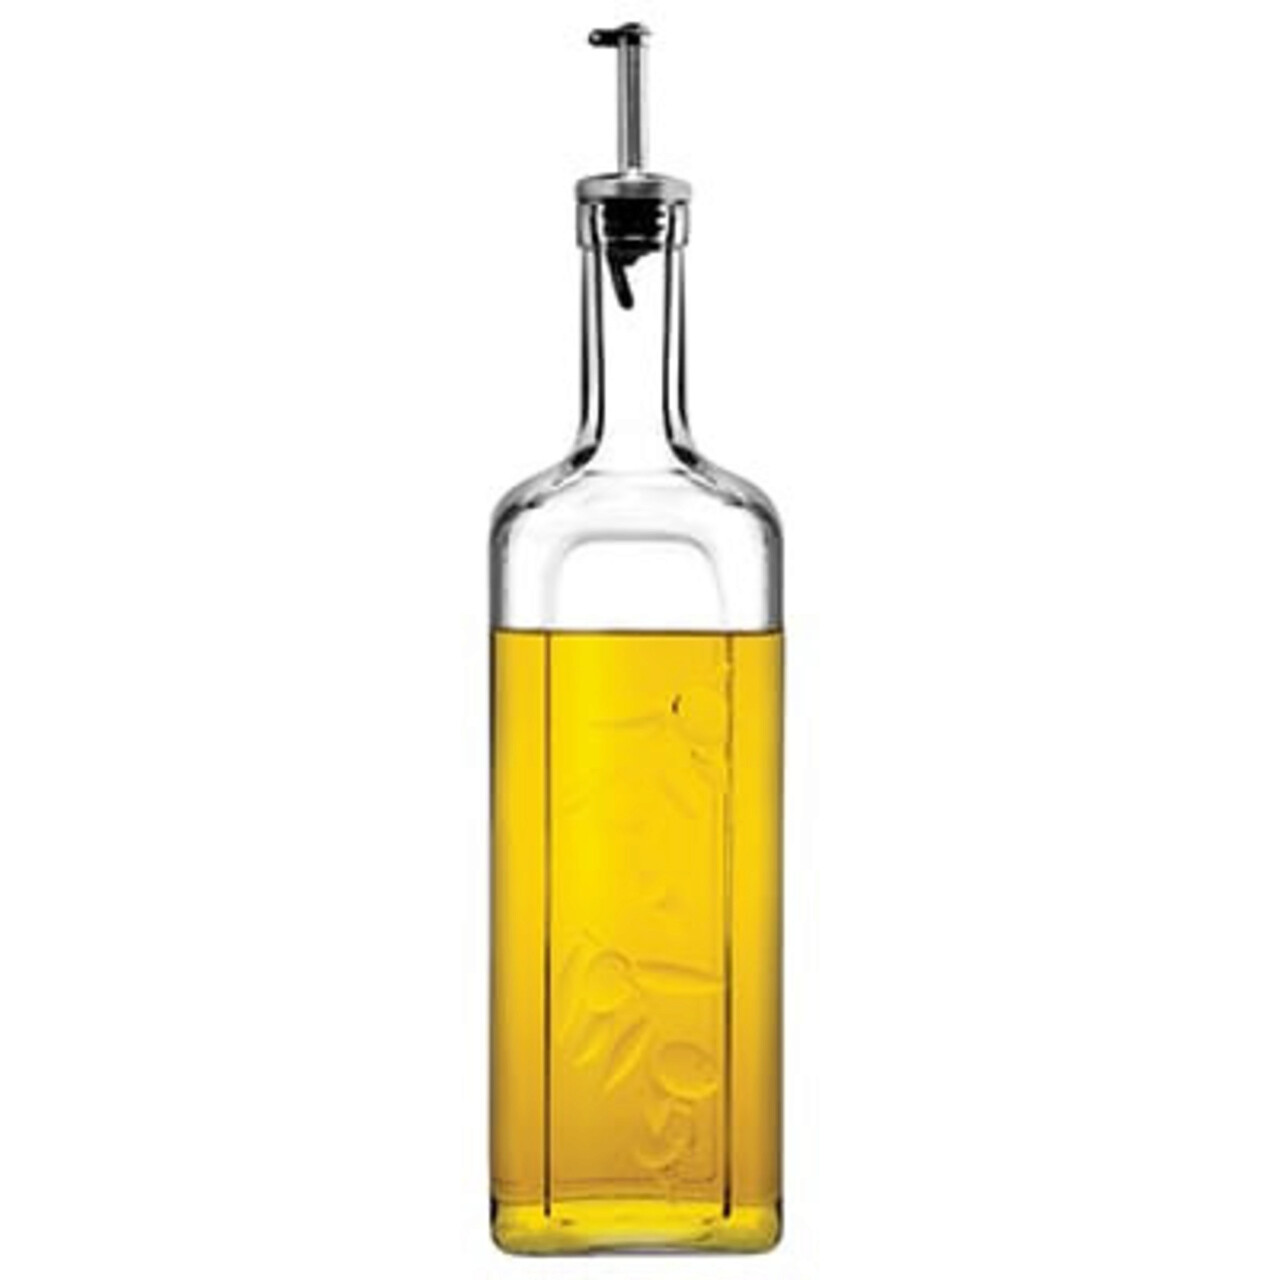 Sticla ulei/otet cu dop metalic Homemade, Pasabahce, 500 ml, otel/sticla, transparent